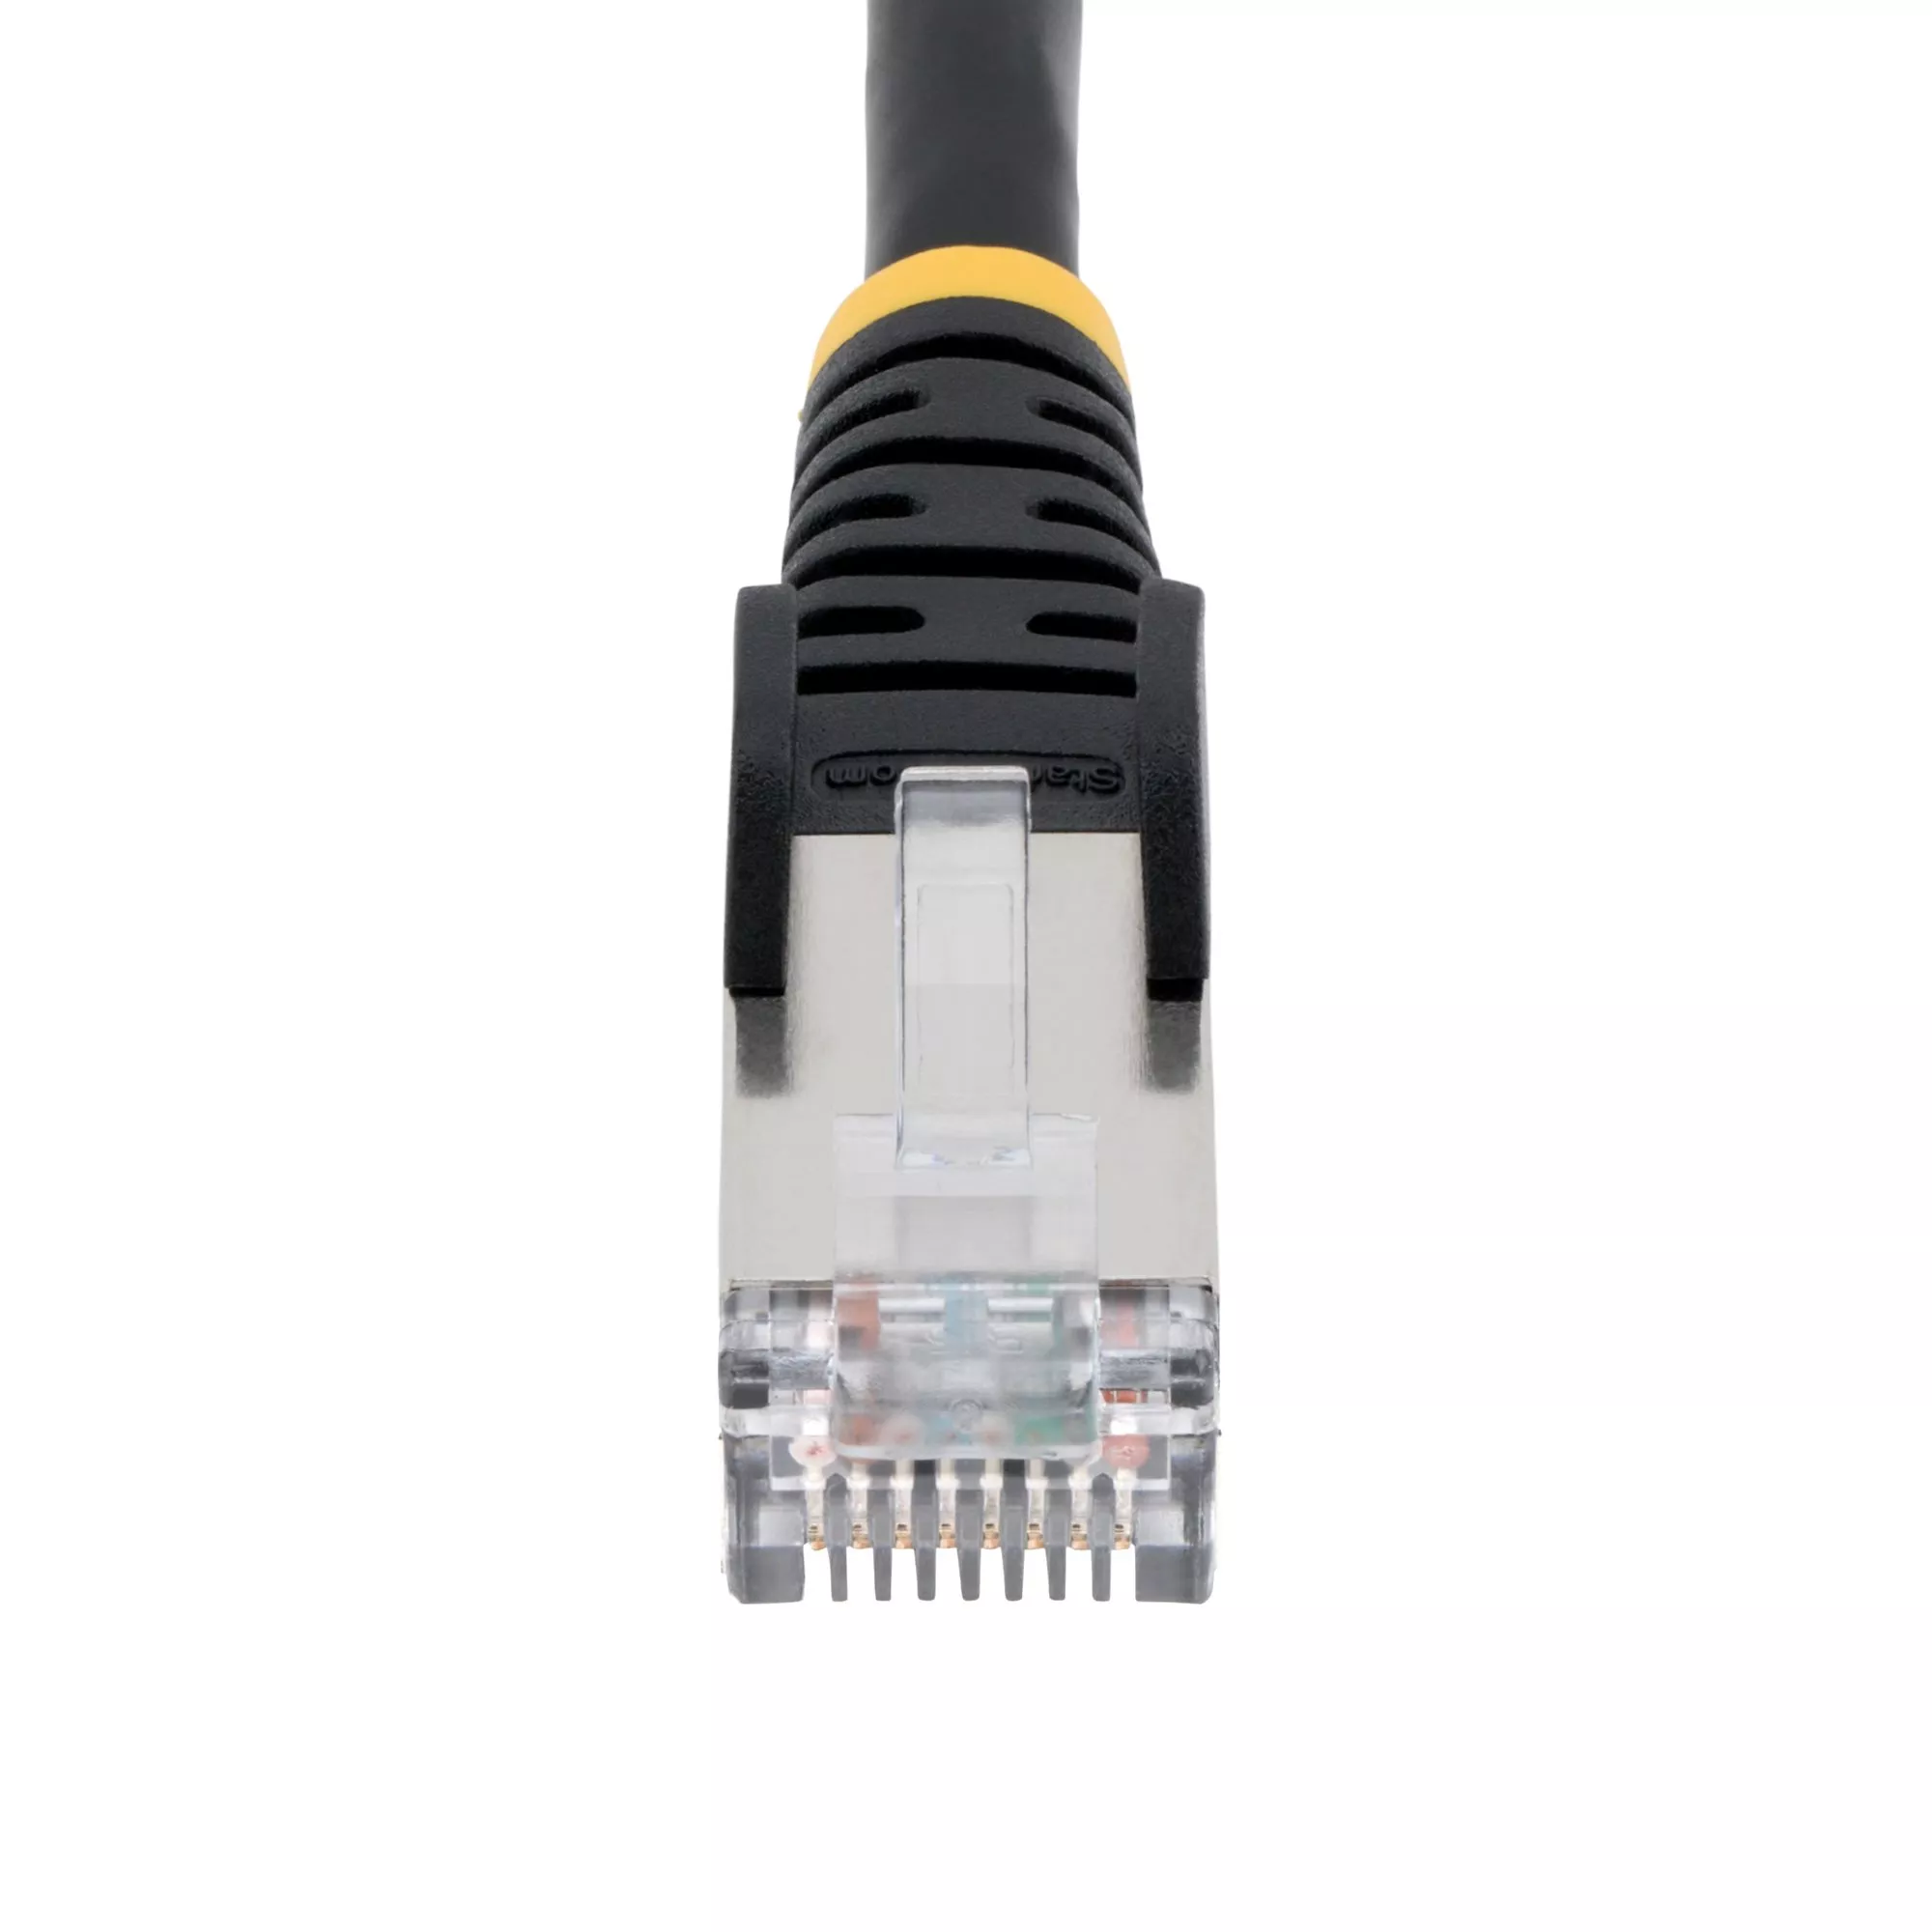 Vente StarTech.com Câble Ethernet CAT6a 5m - Low Smoke StarTech.com au meilleur prix - visuel 4